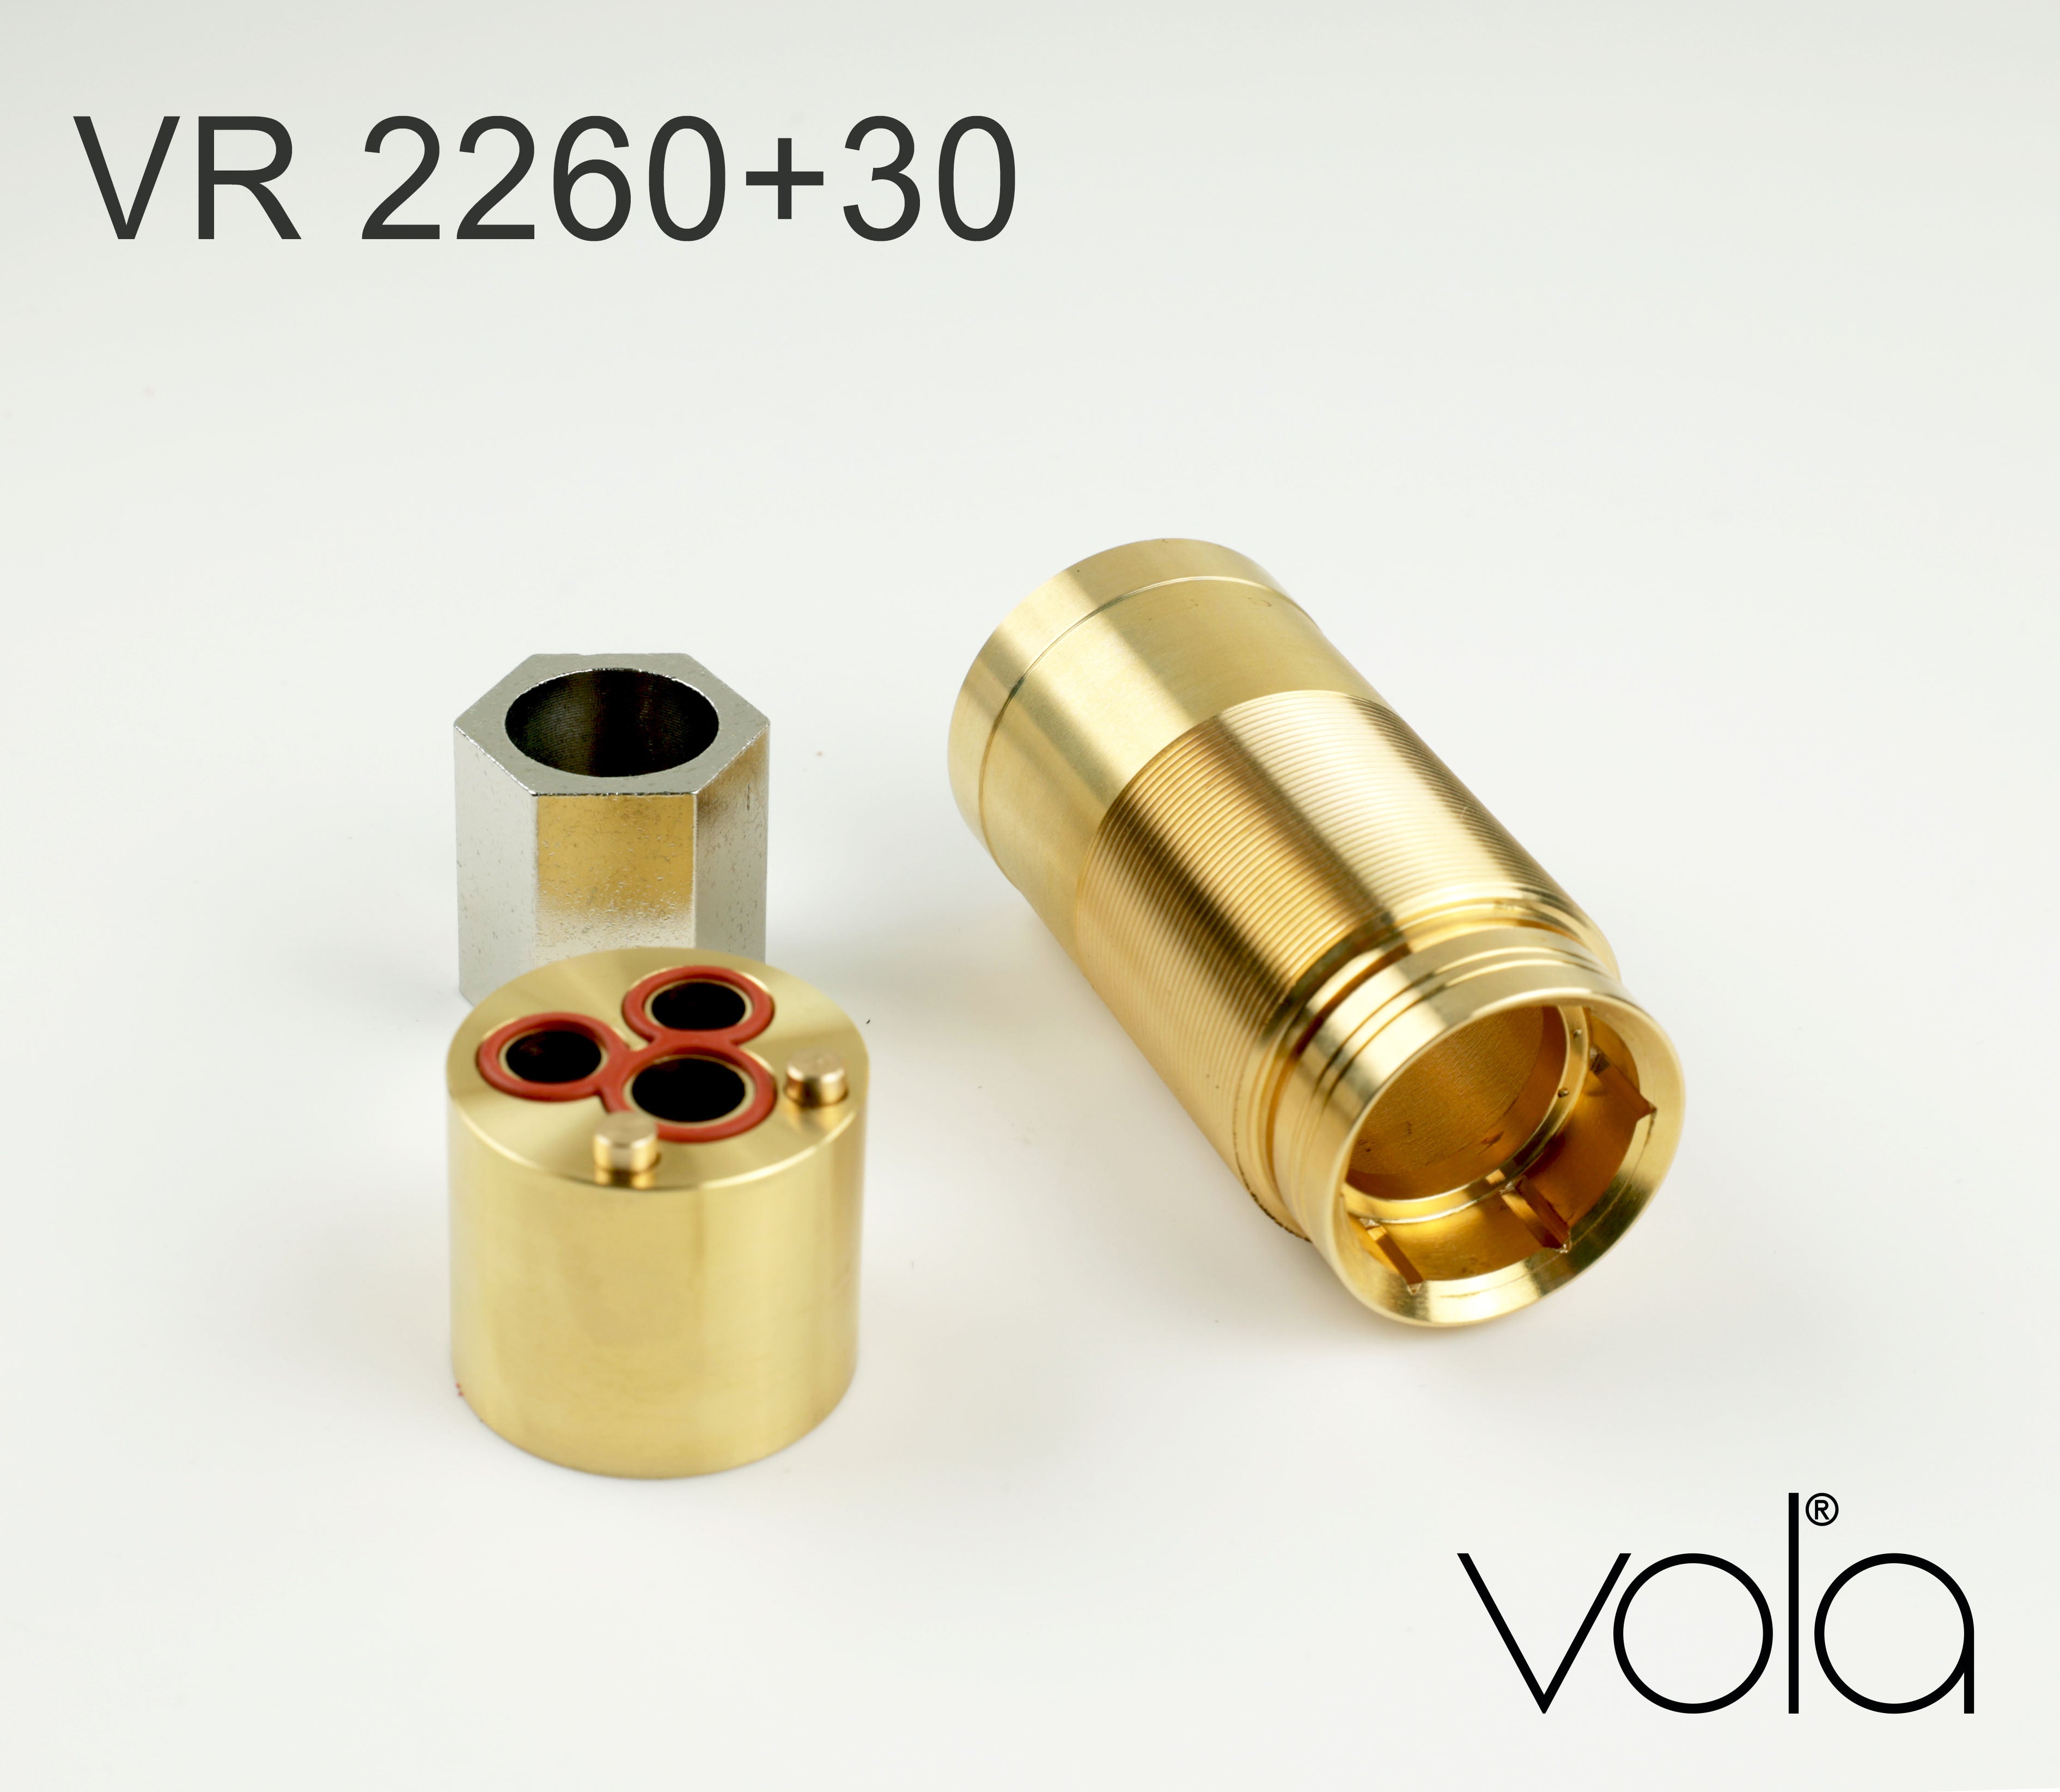 VOLA VR2260+30